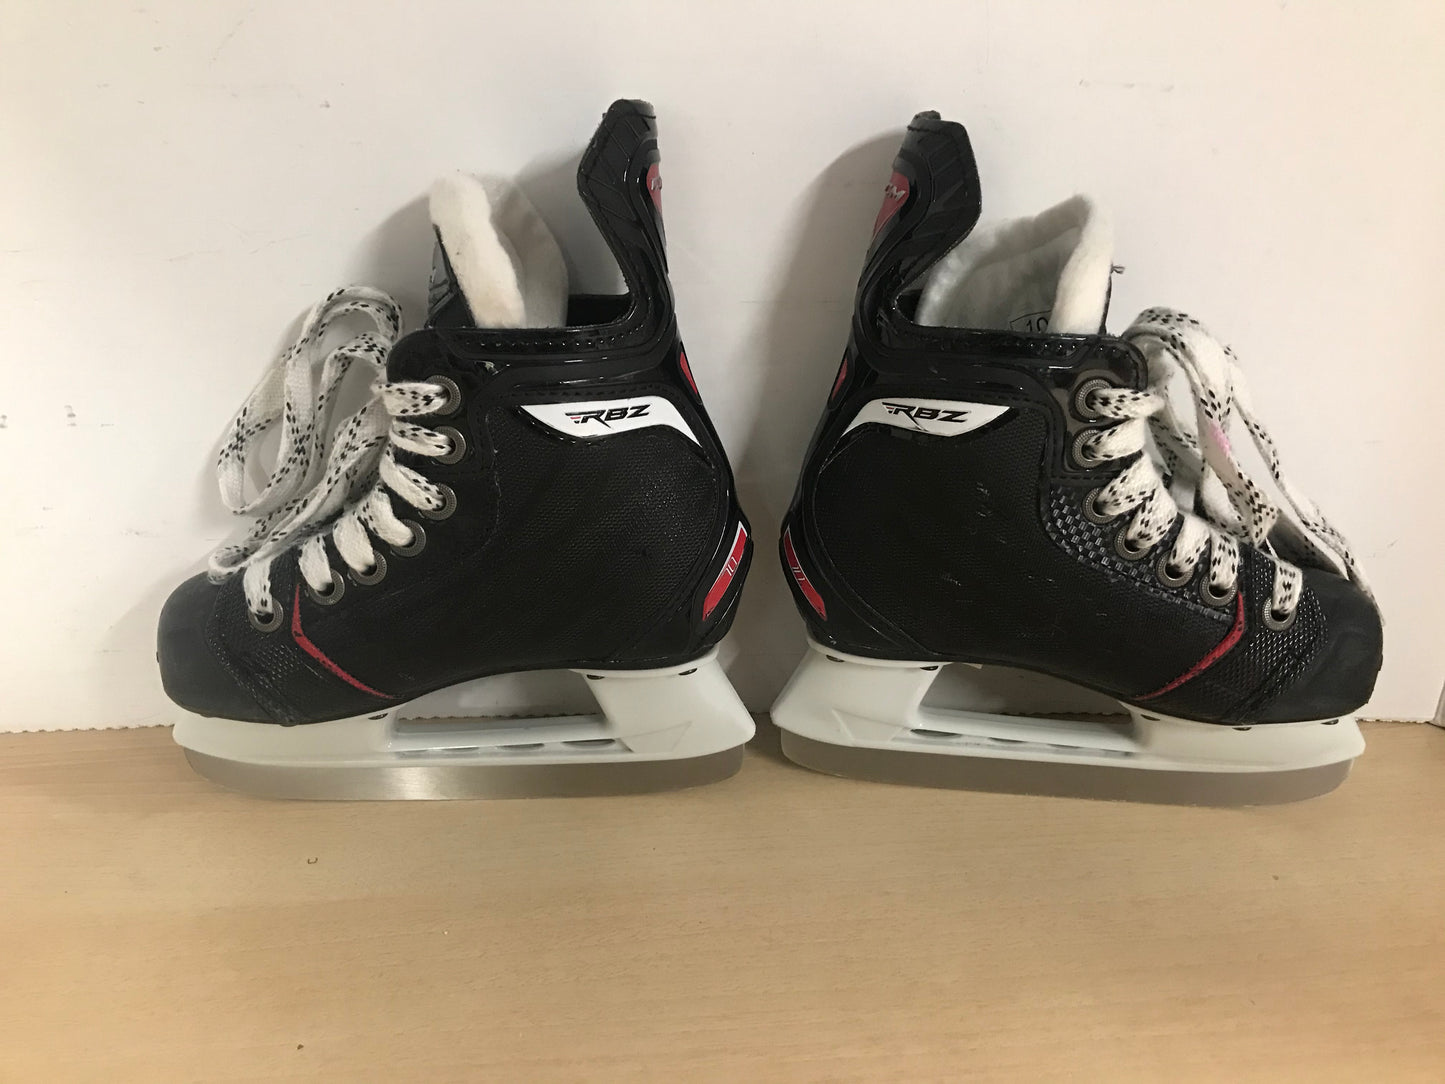 Hockey Skates Child Size 10 Shoe Size Toddler CCM RBZ New Demo